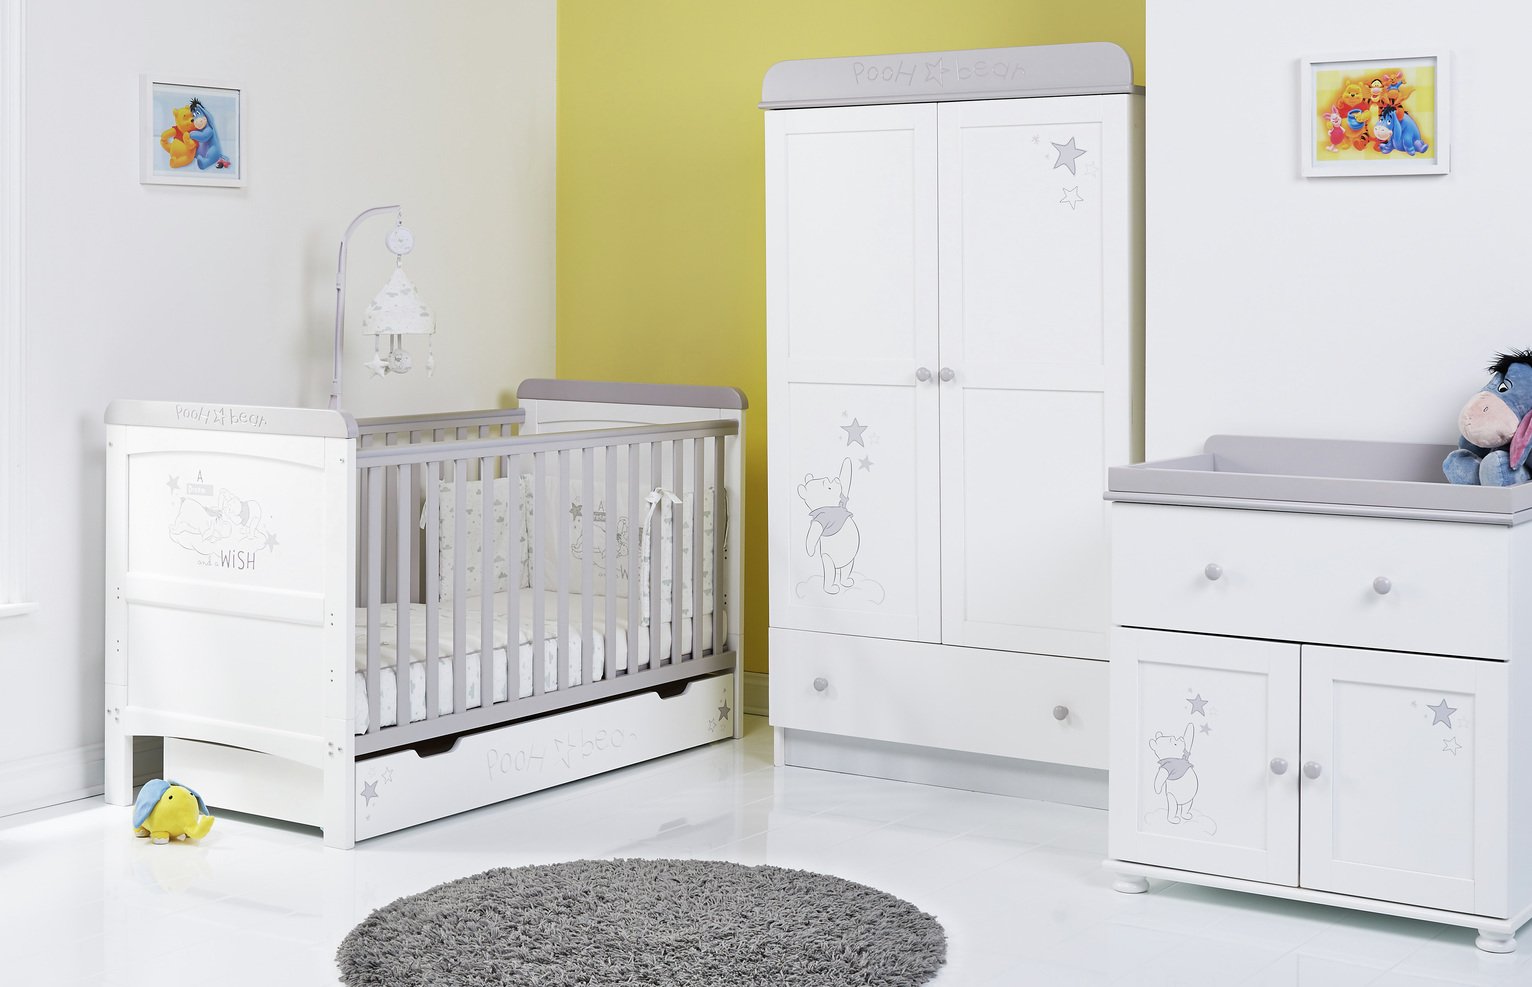 argos nursery furniture set